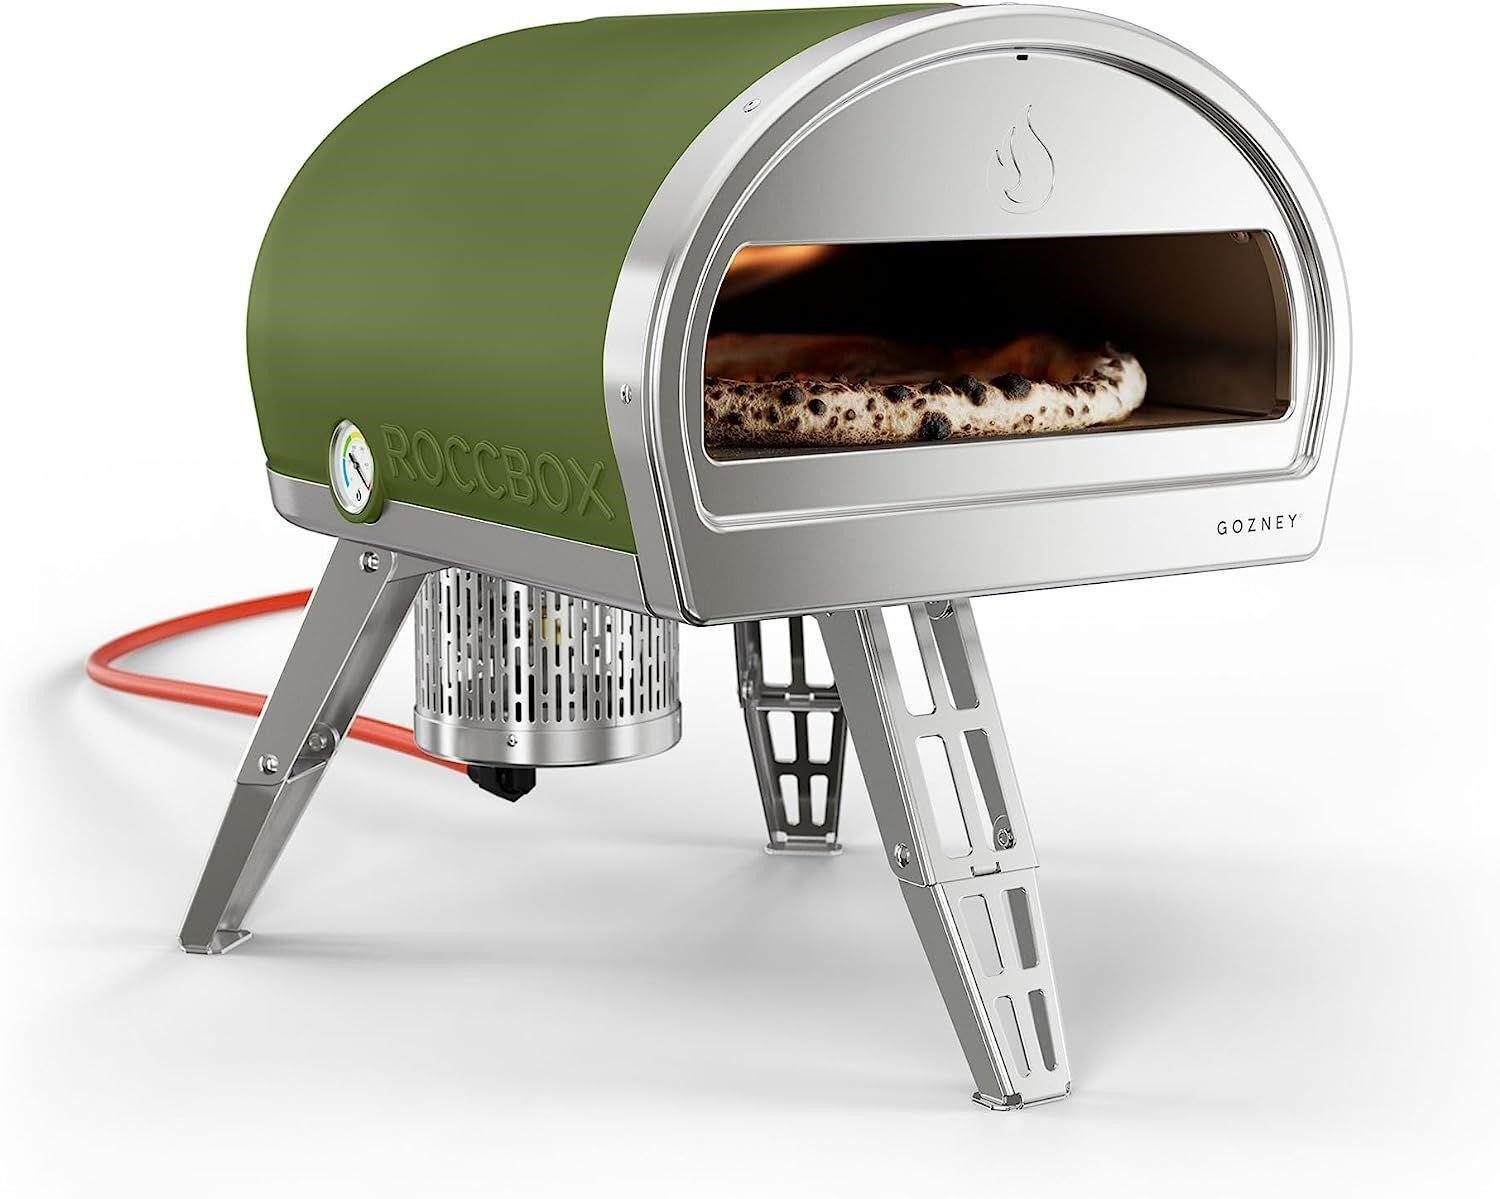 $600 Outdoor Pizza Oven